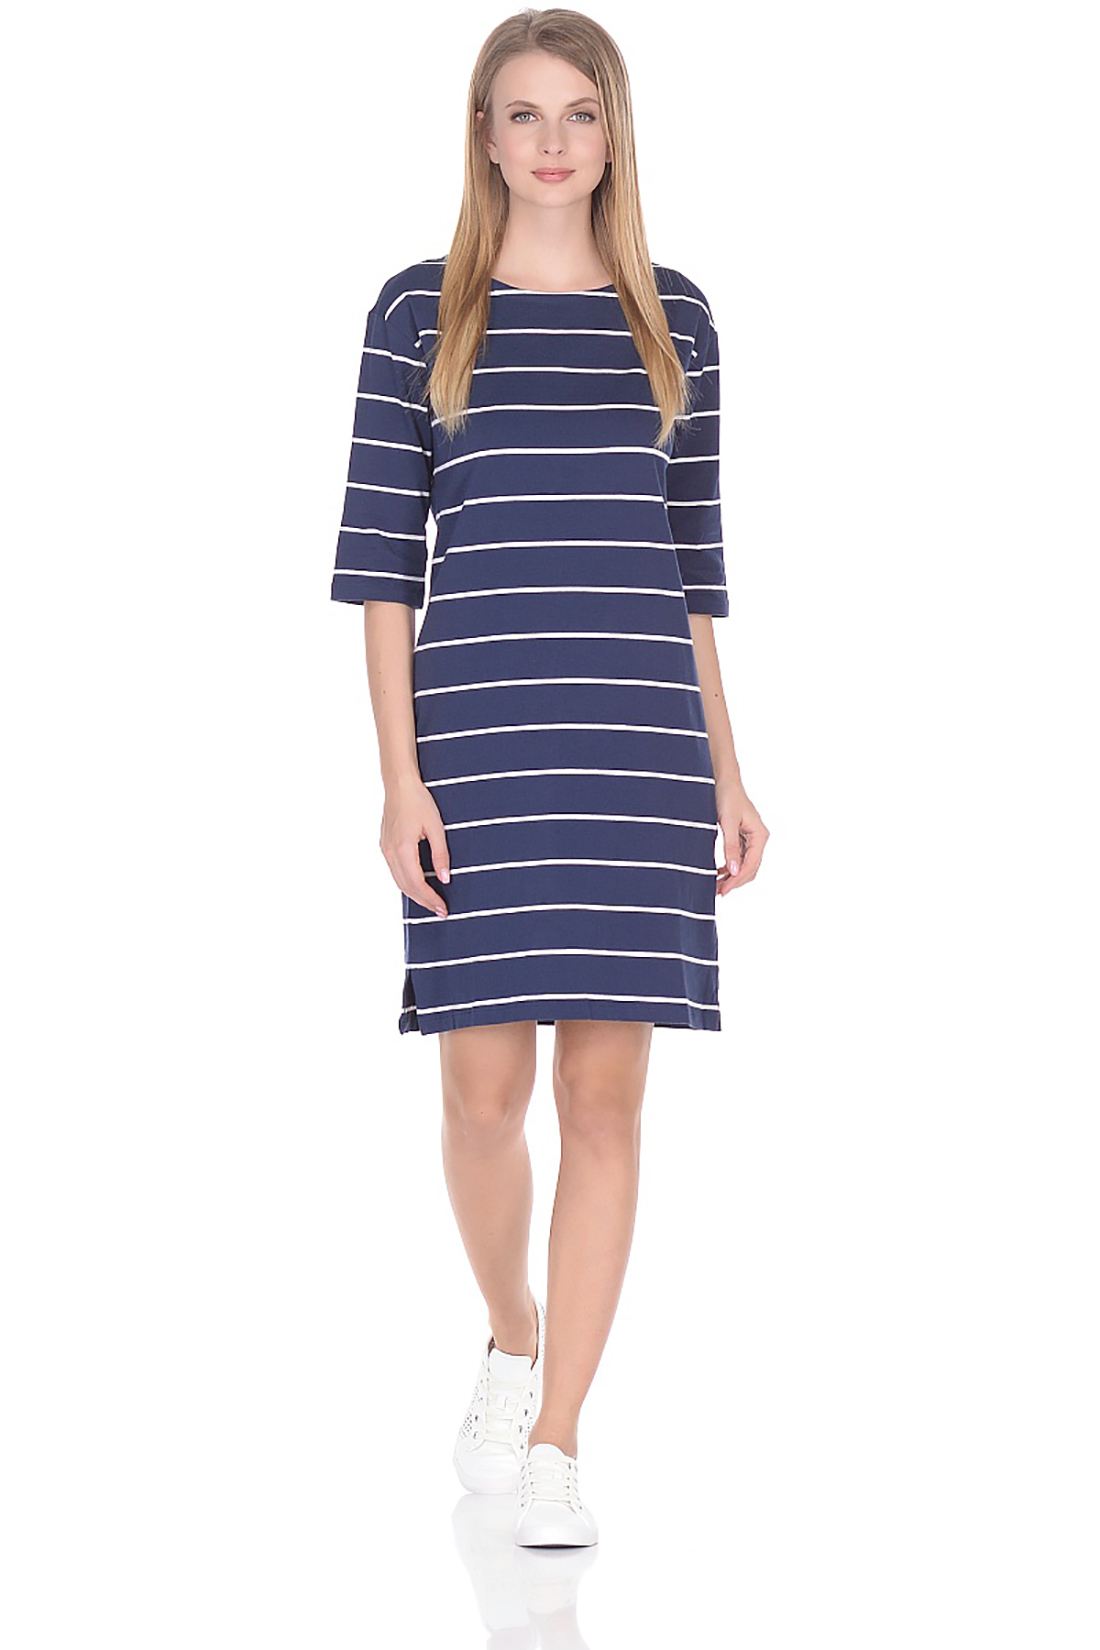 Платье из трикотажа в полоску (арт. baon B458046), размер 3XL, цвет dark navy striped#синий Платье из трикотажа в полоску (арт. baon B458046) - фото 1